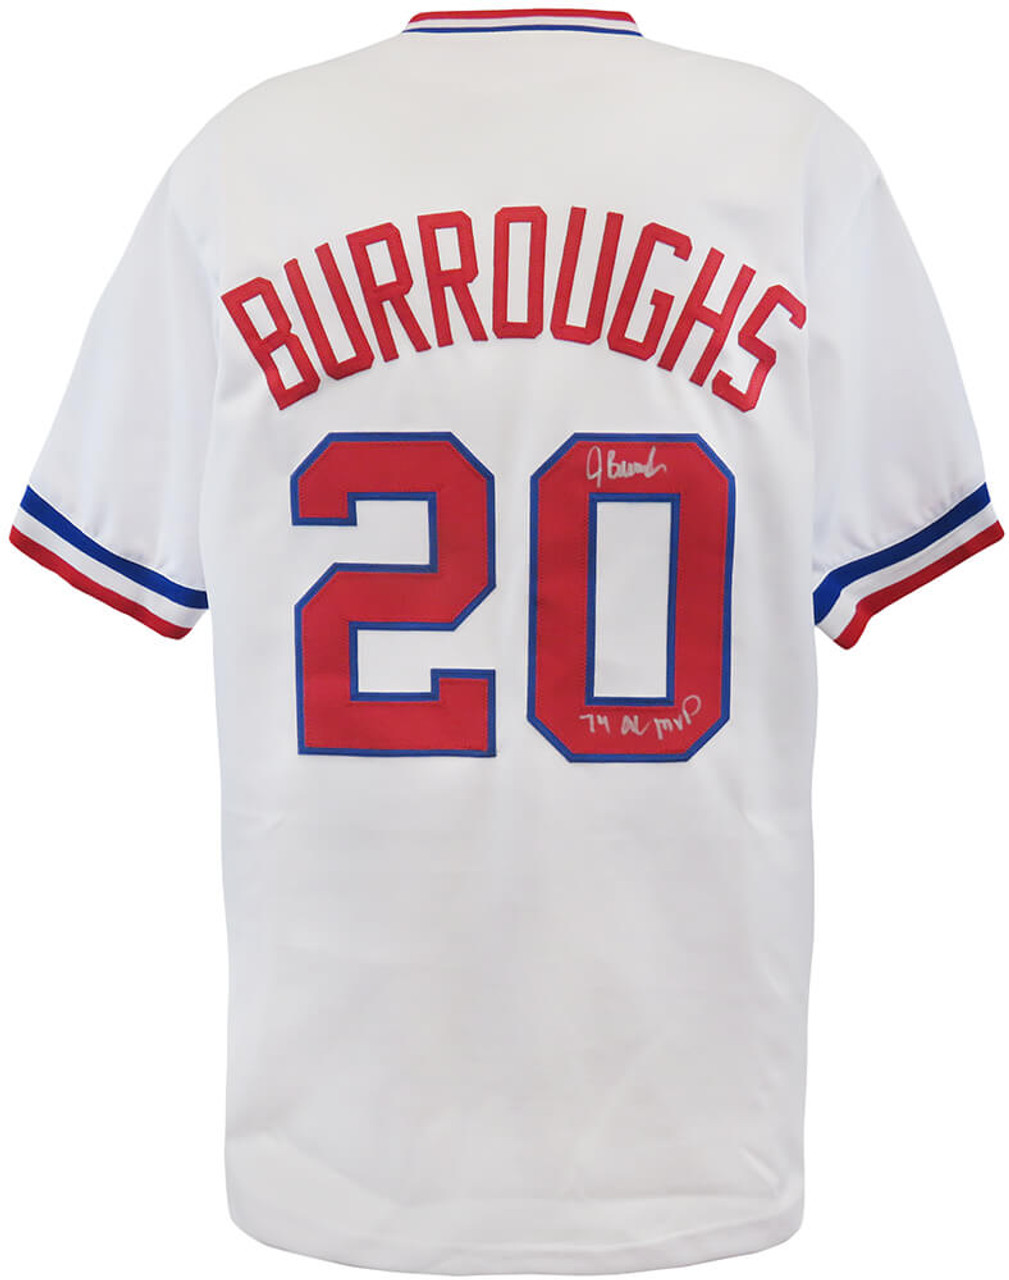 Texas Rangers Jeff Burroughs Signed White Jersey w/74 AL MVP - Schwartz  Authenticated